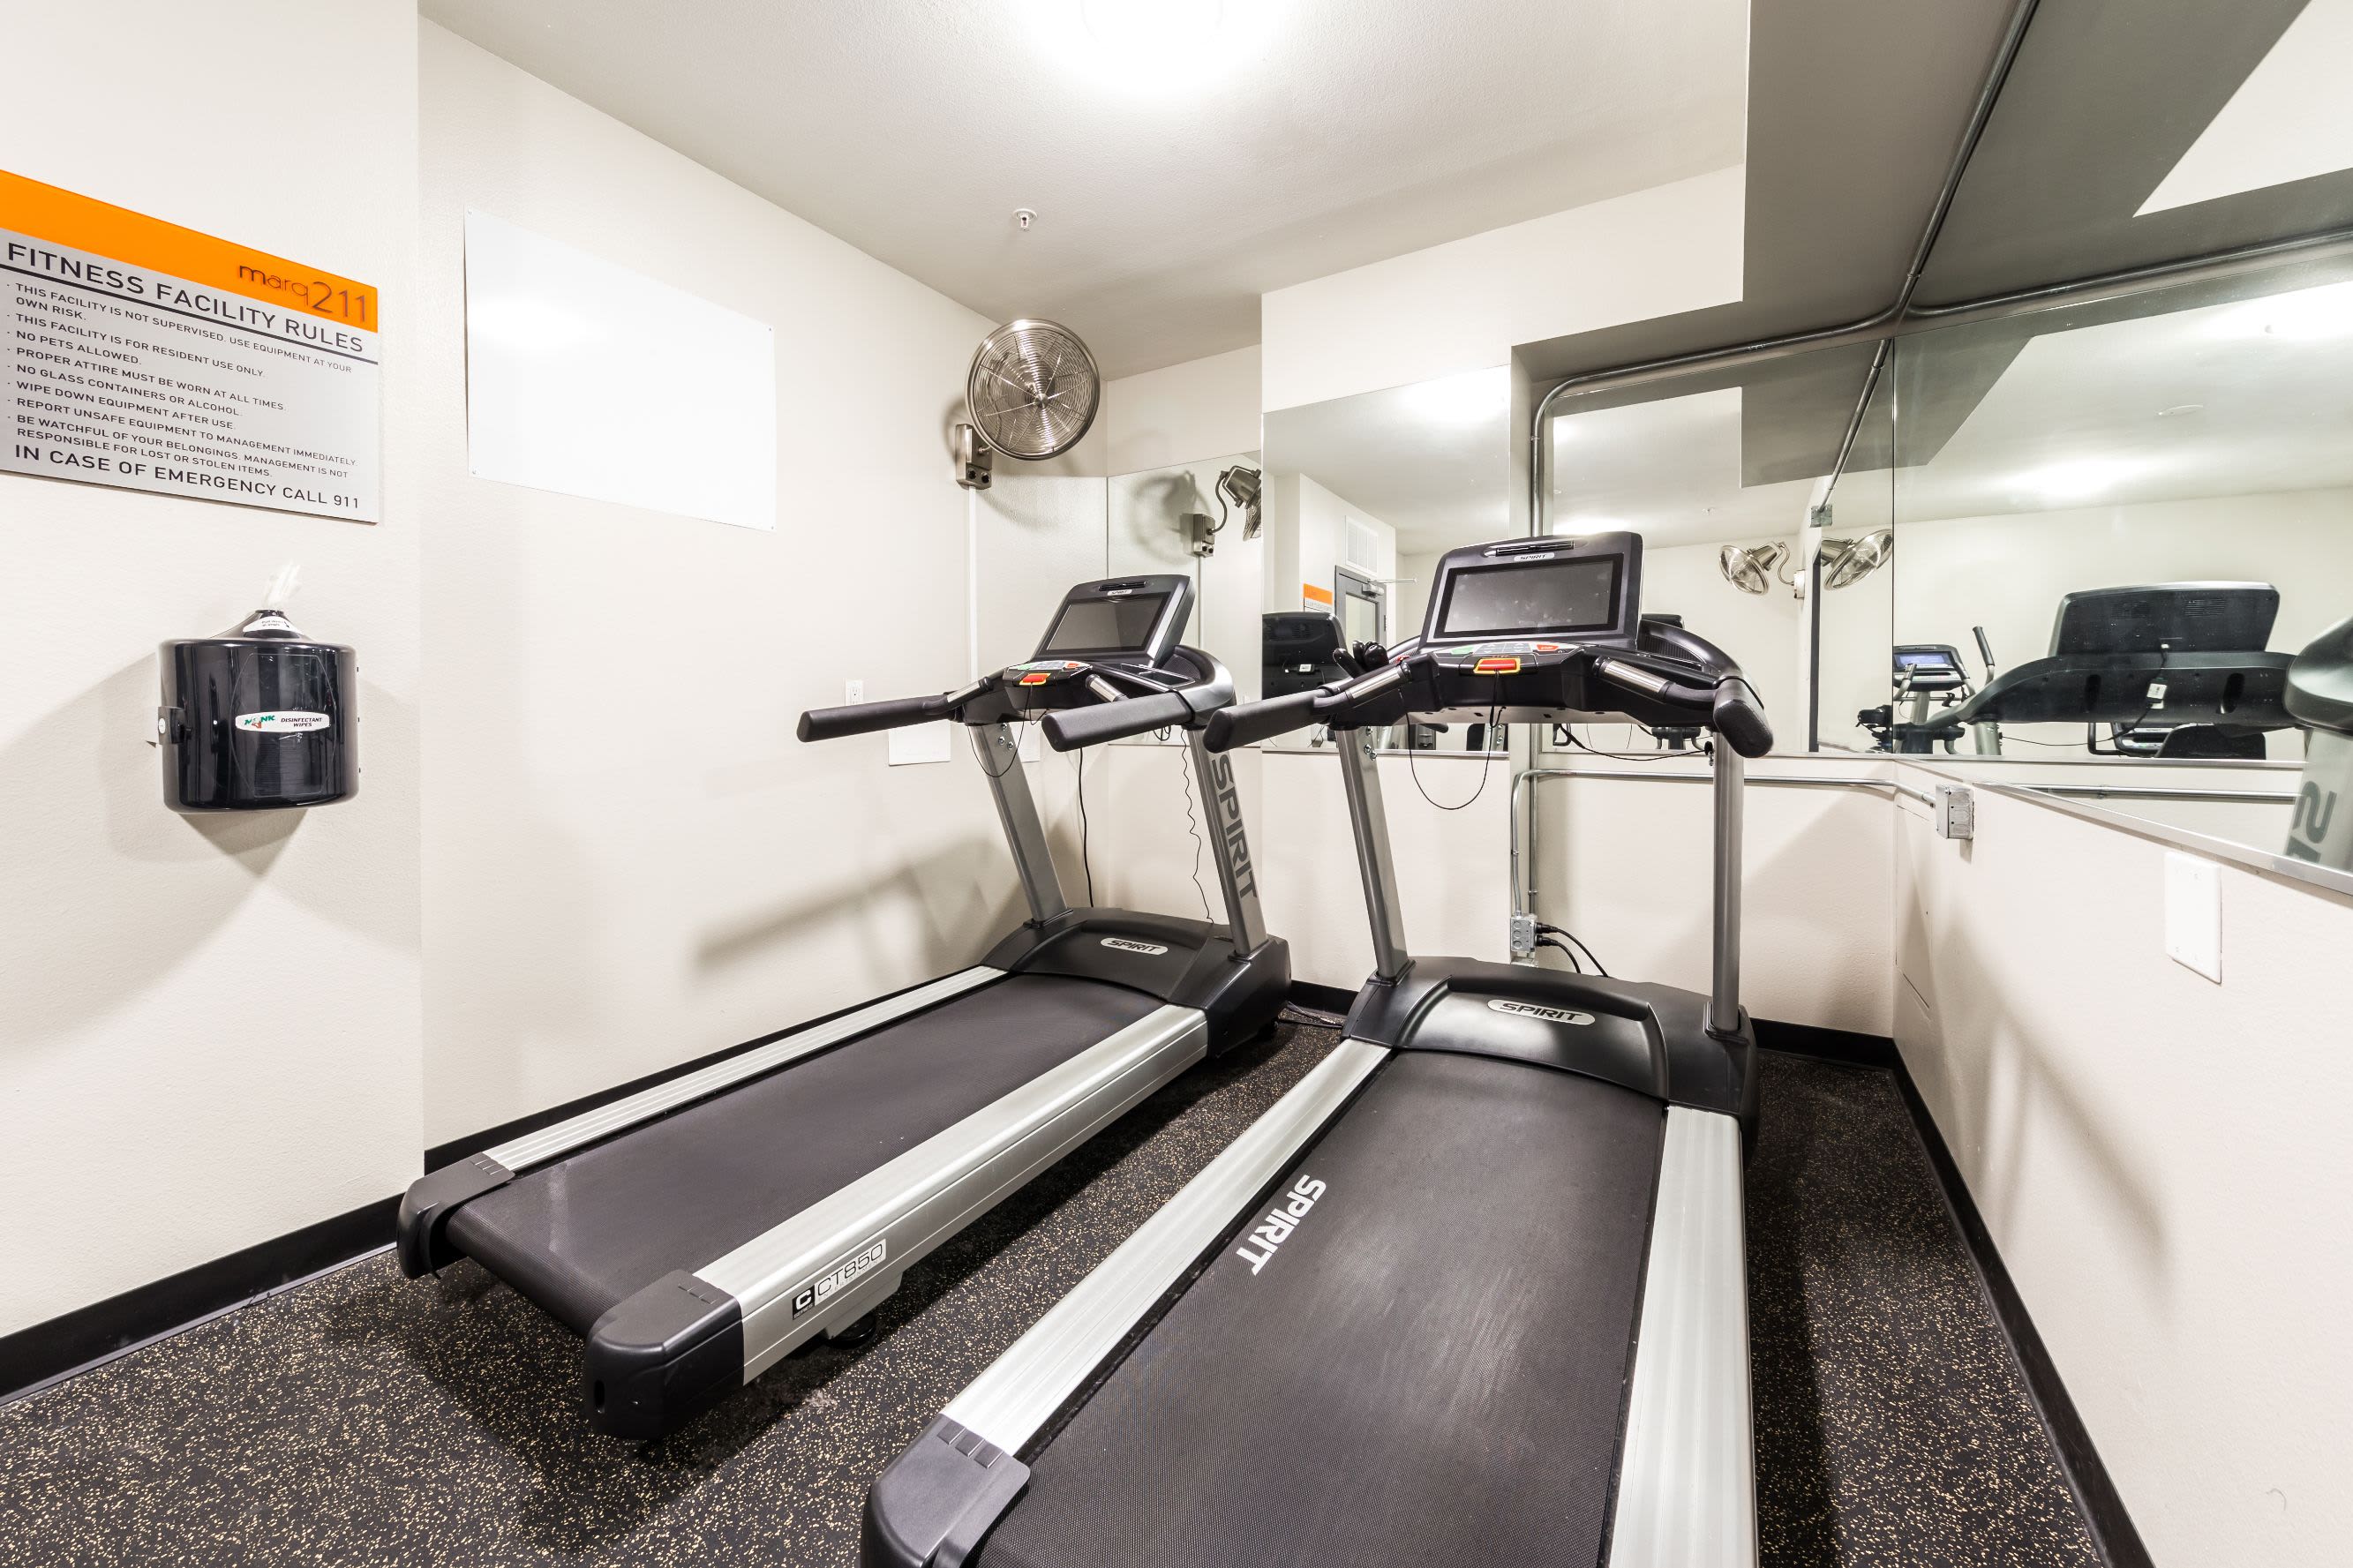 Treadmills in fitness center at Marq 211 in Seattle, Washington